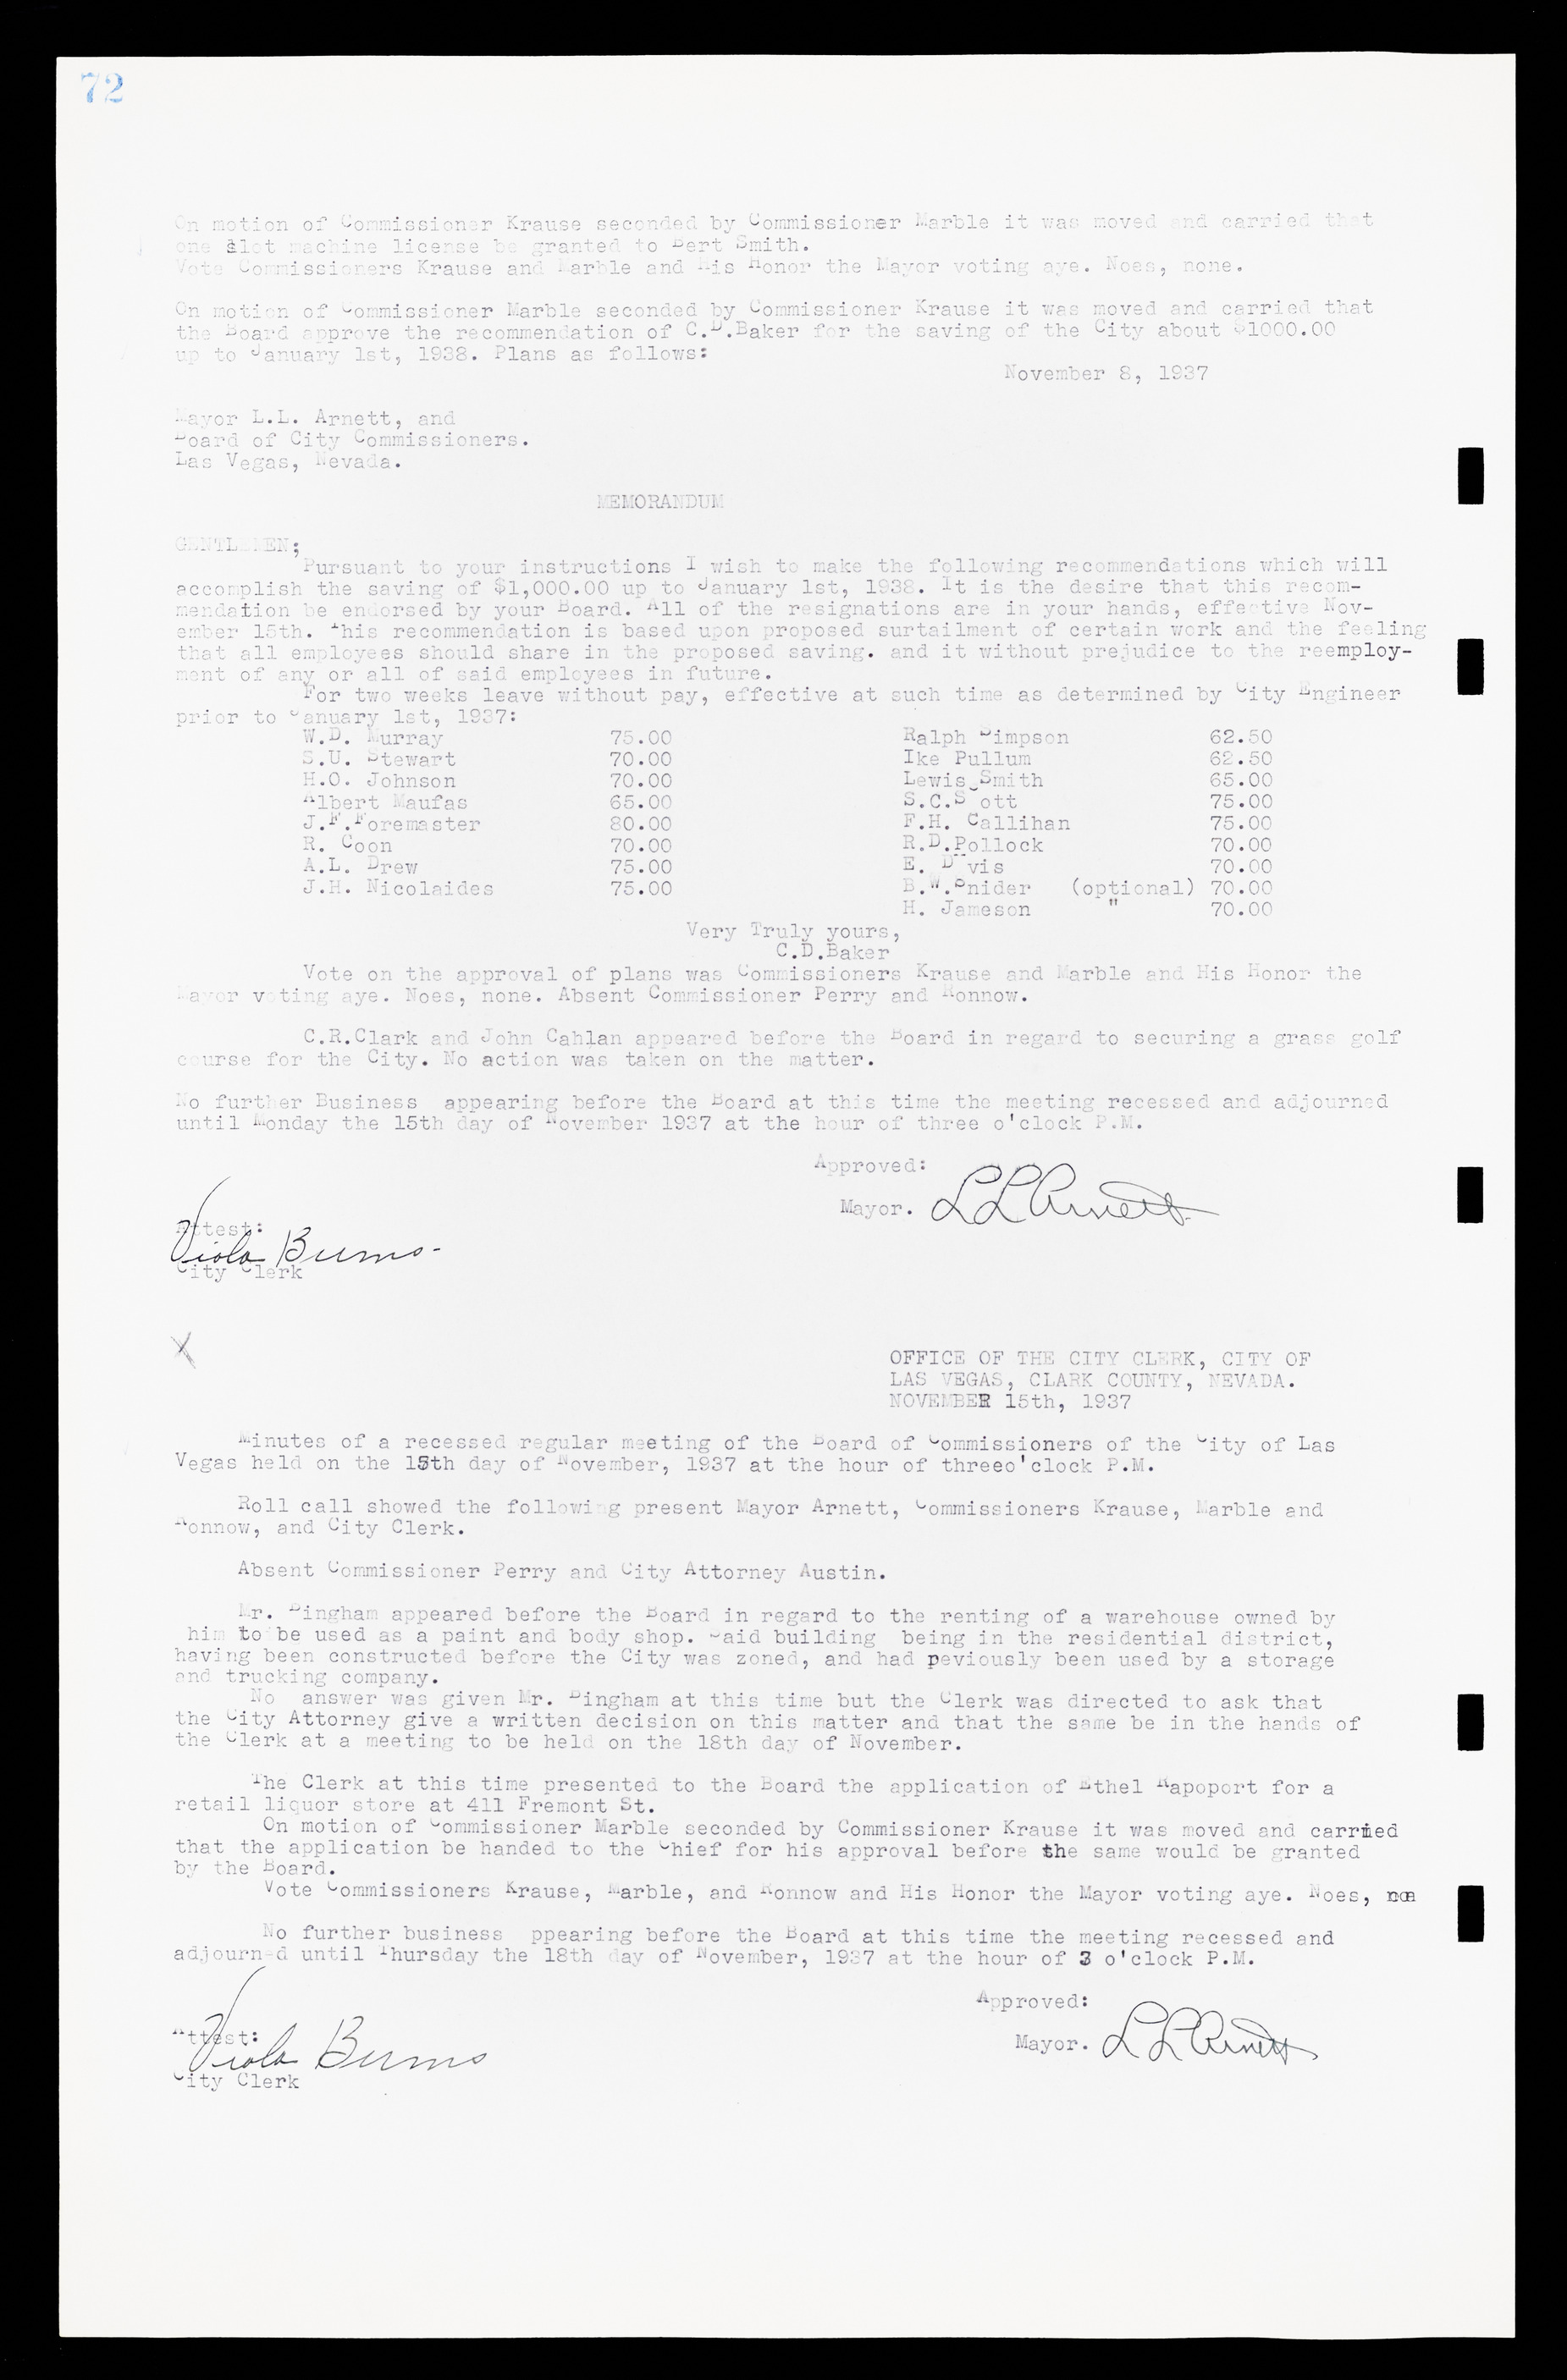 Las Vegas City Commission Minutes, February 17, 1937 to August 4, 1942, lvc000004-81